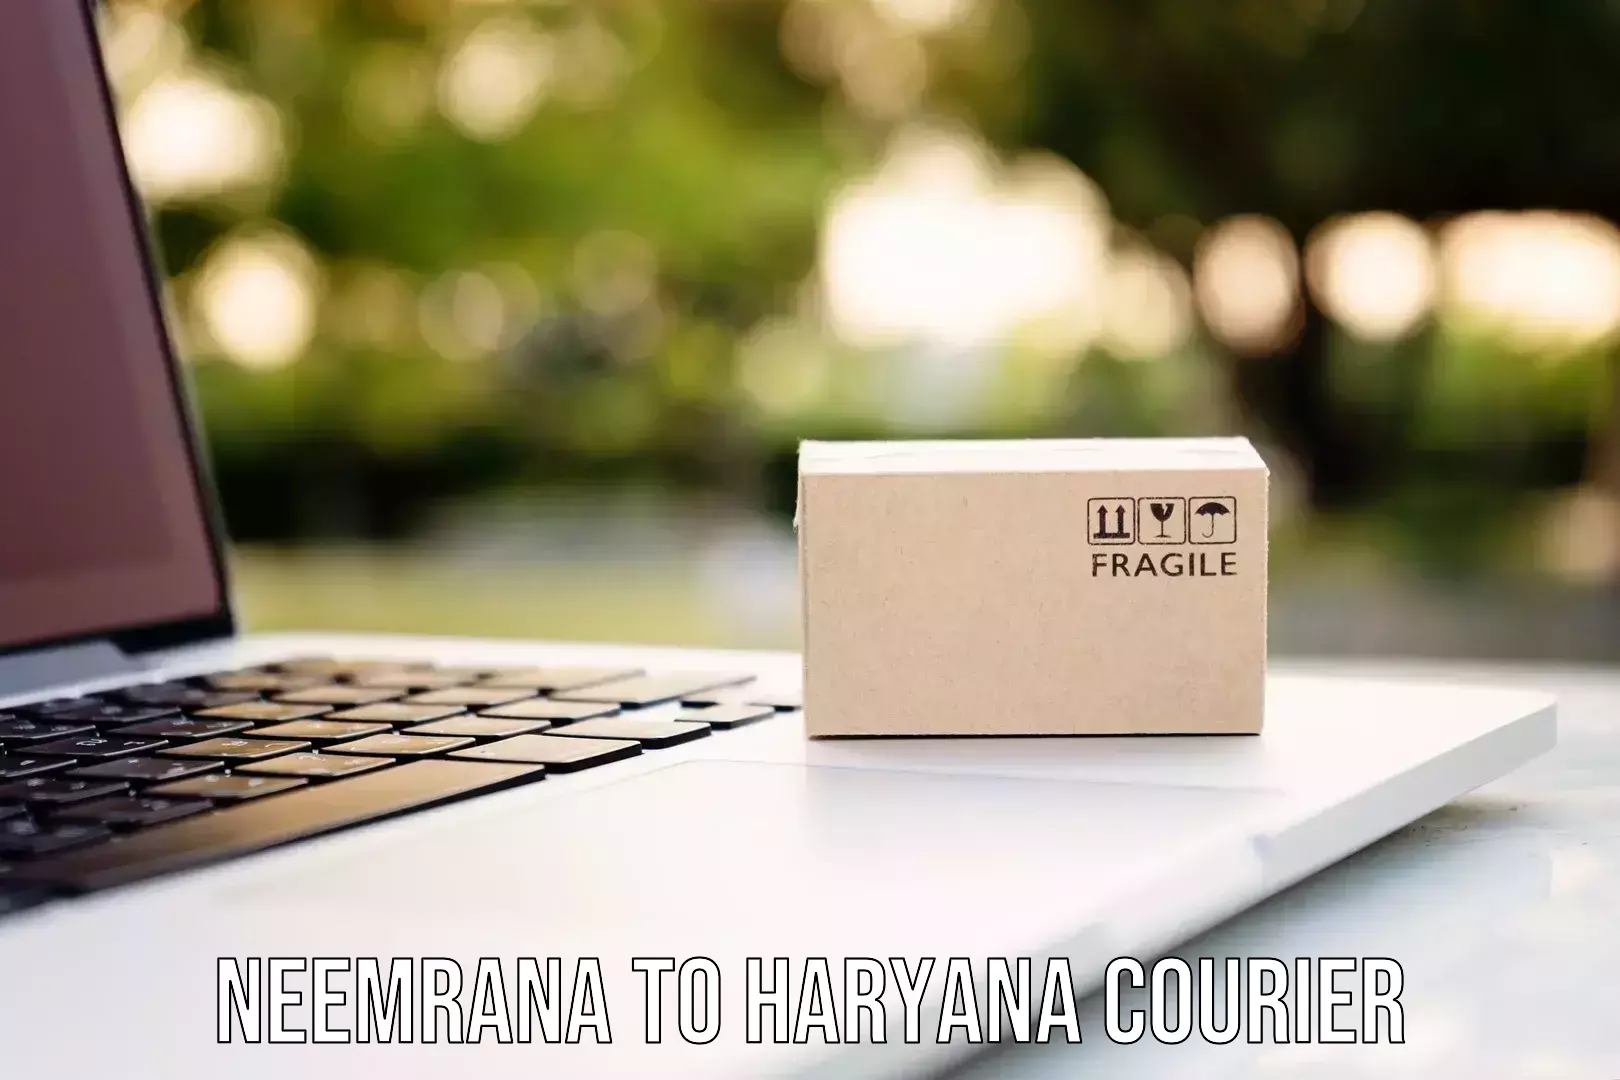 International parcel service Neemrana to Haryana